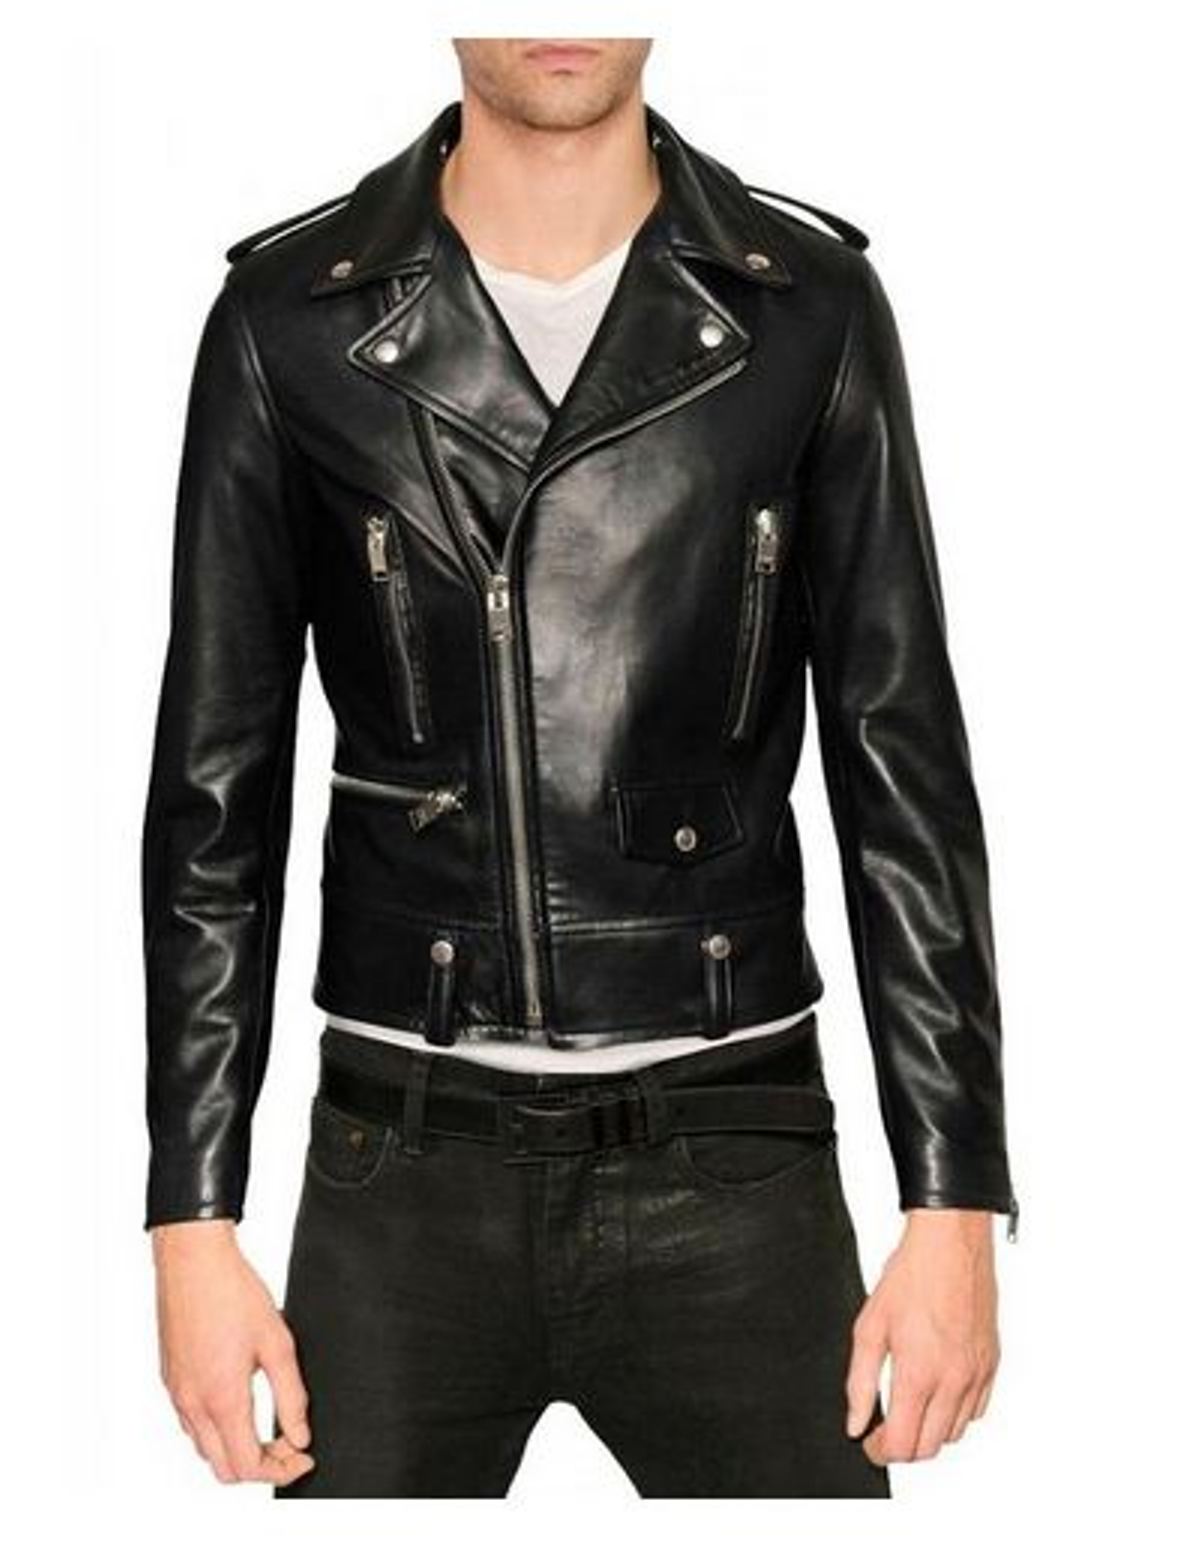 Men Leather Jacket Coat Motorcycle Biker Black Slim Fit Jackets